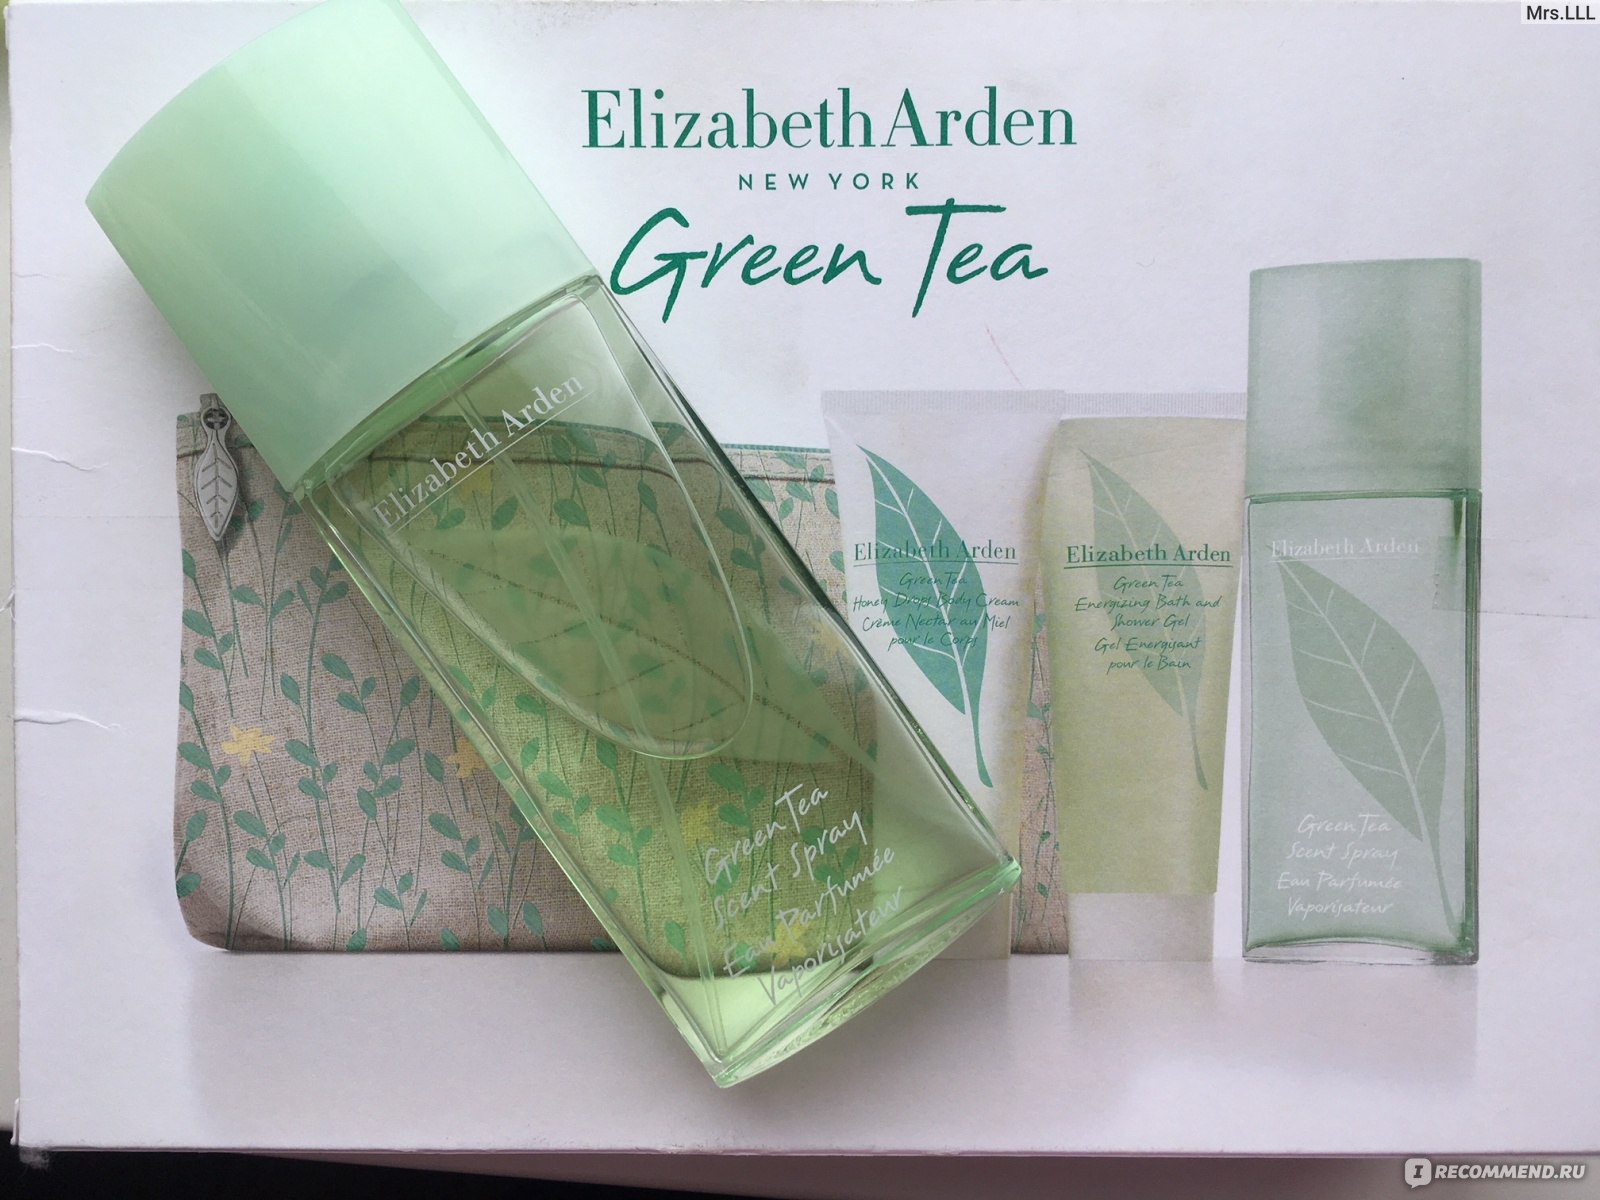 Арден зеленый чай духи. Elizabeth Arden Green Tea Парфюм. Элизабет Арден зеленый чай. Духи Elizabeth Arden Green Tea реклама. Арден Грин ти.